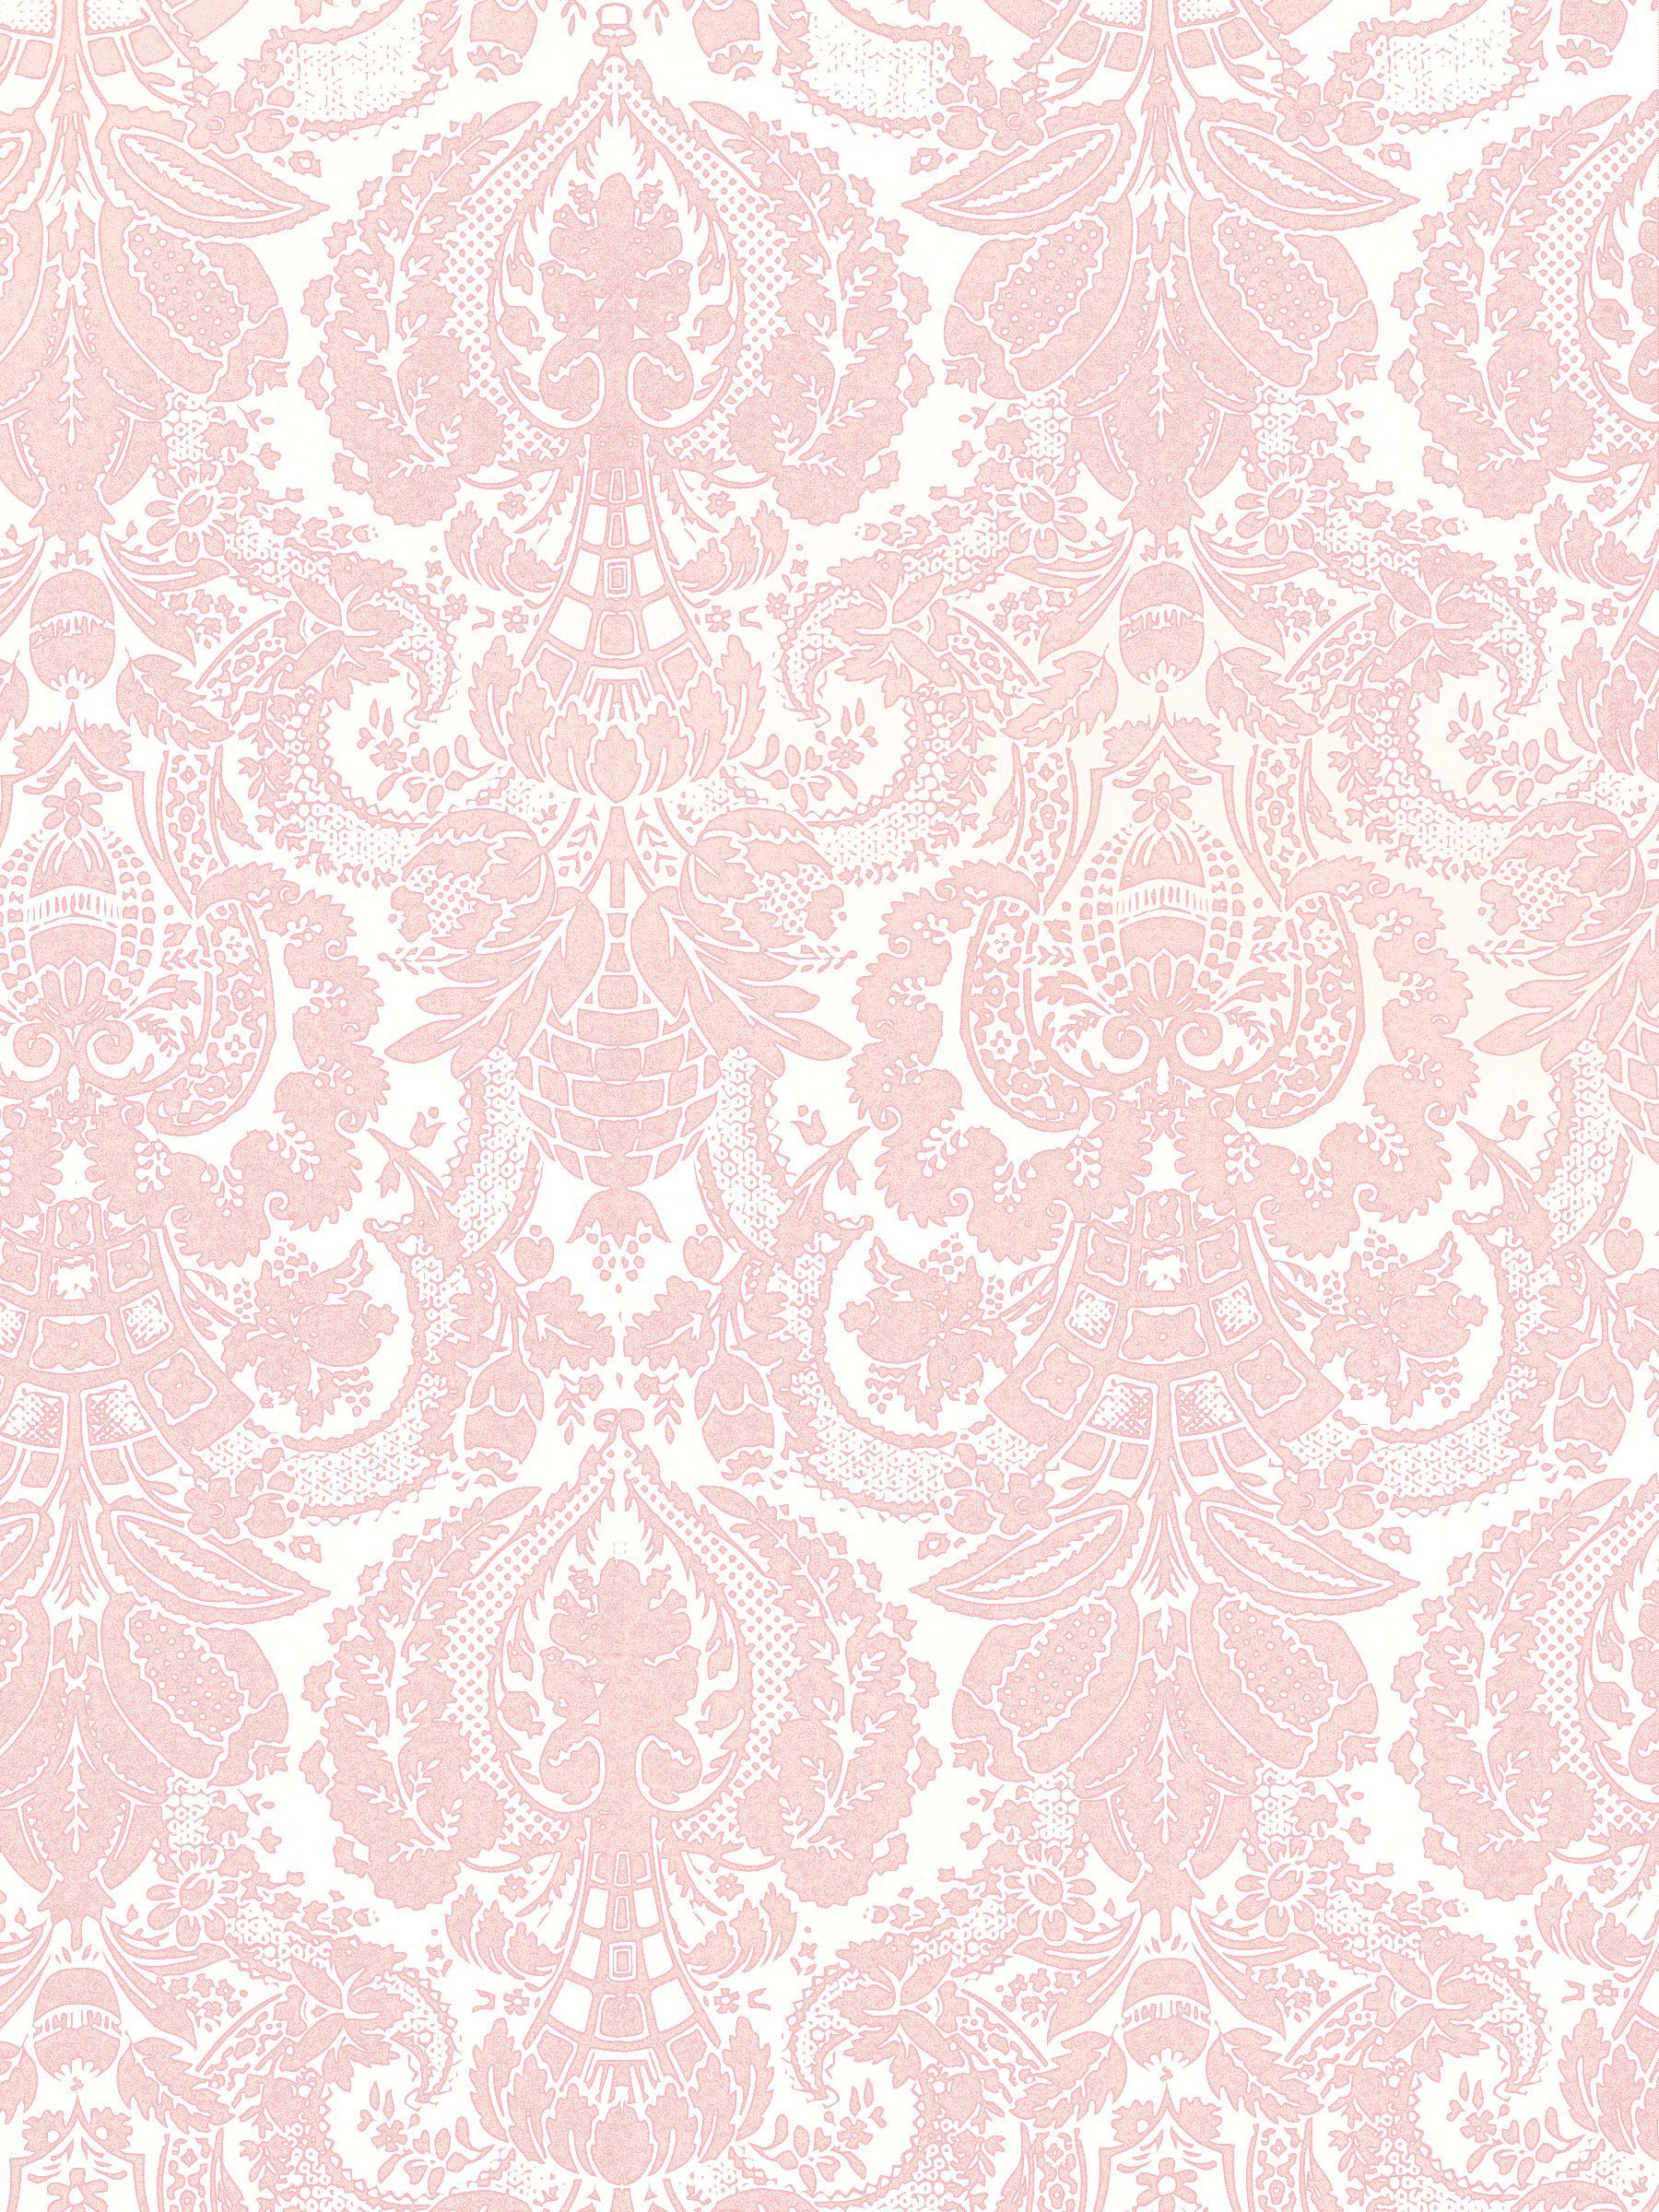 Retro Pink Seamless Damask Wallpaper Stock Vector  Illustration of  renaissance abstract 49223176